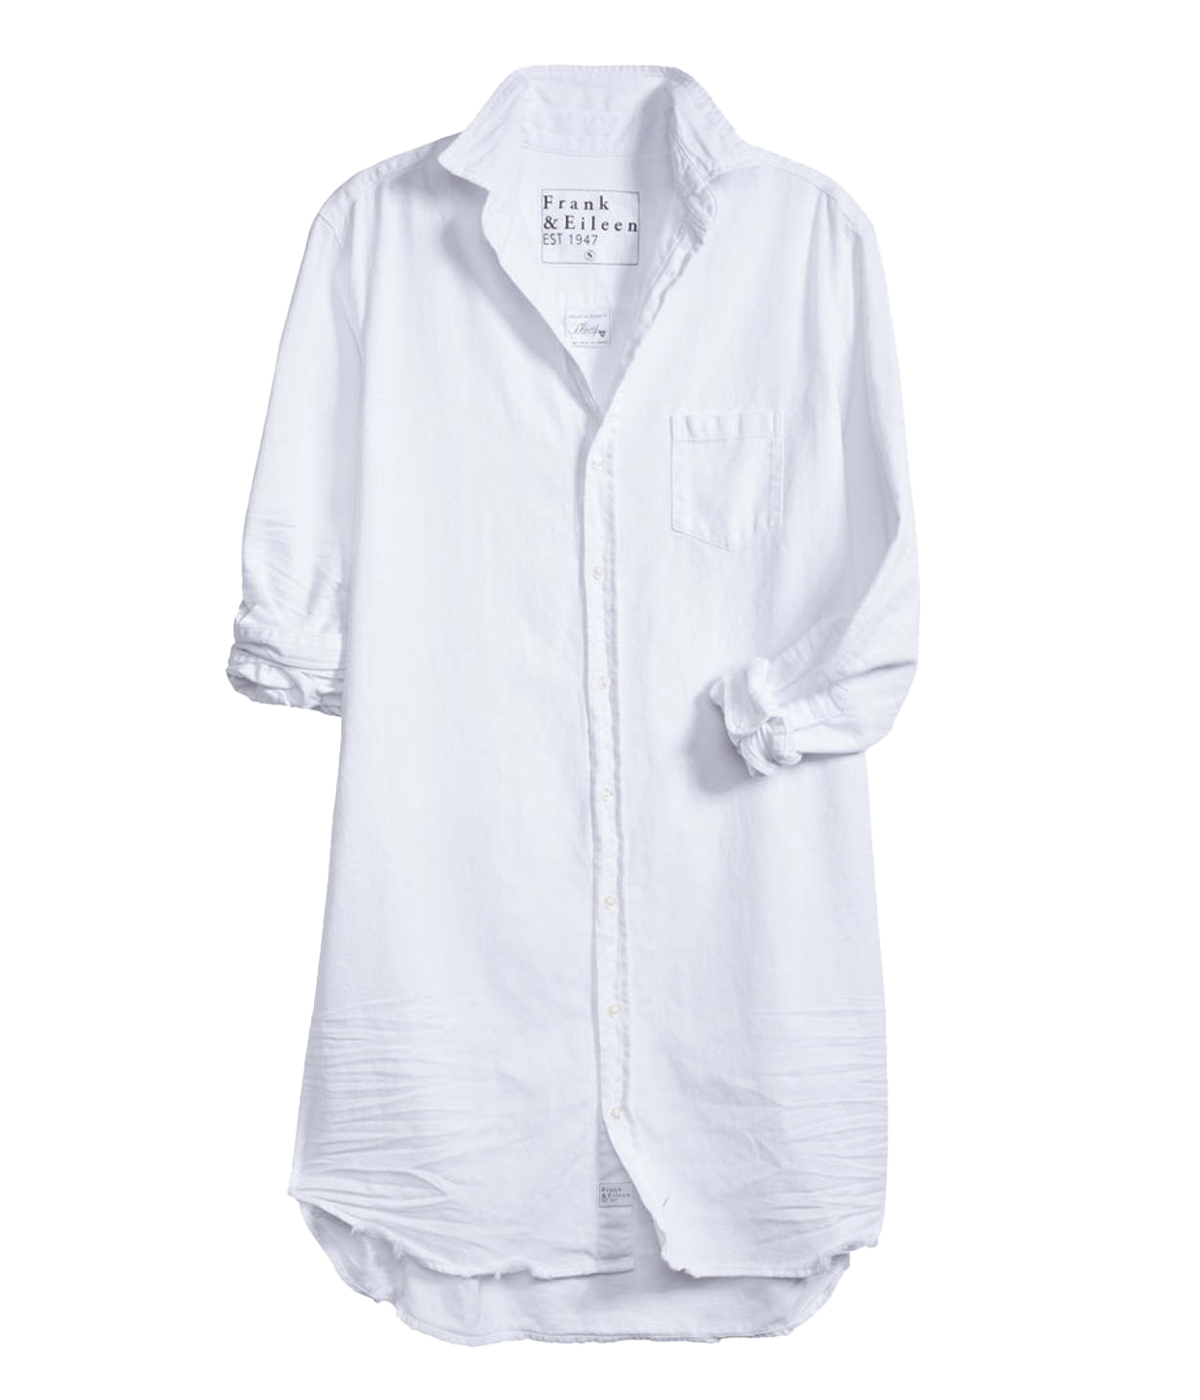 Mary Woven Denim Button Up Dress in White Tattered Denim